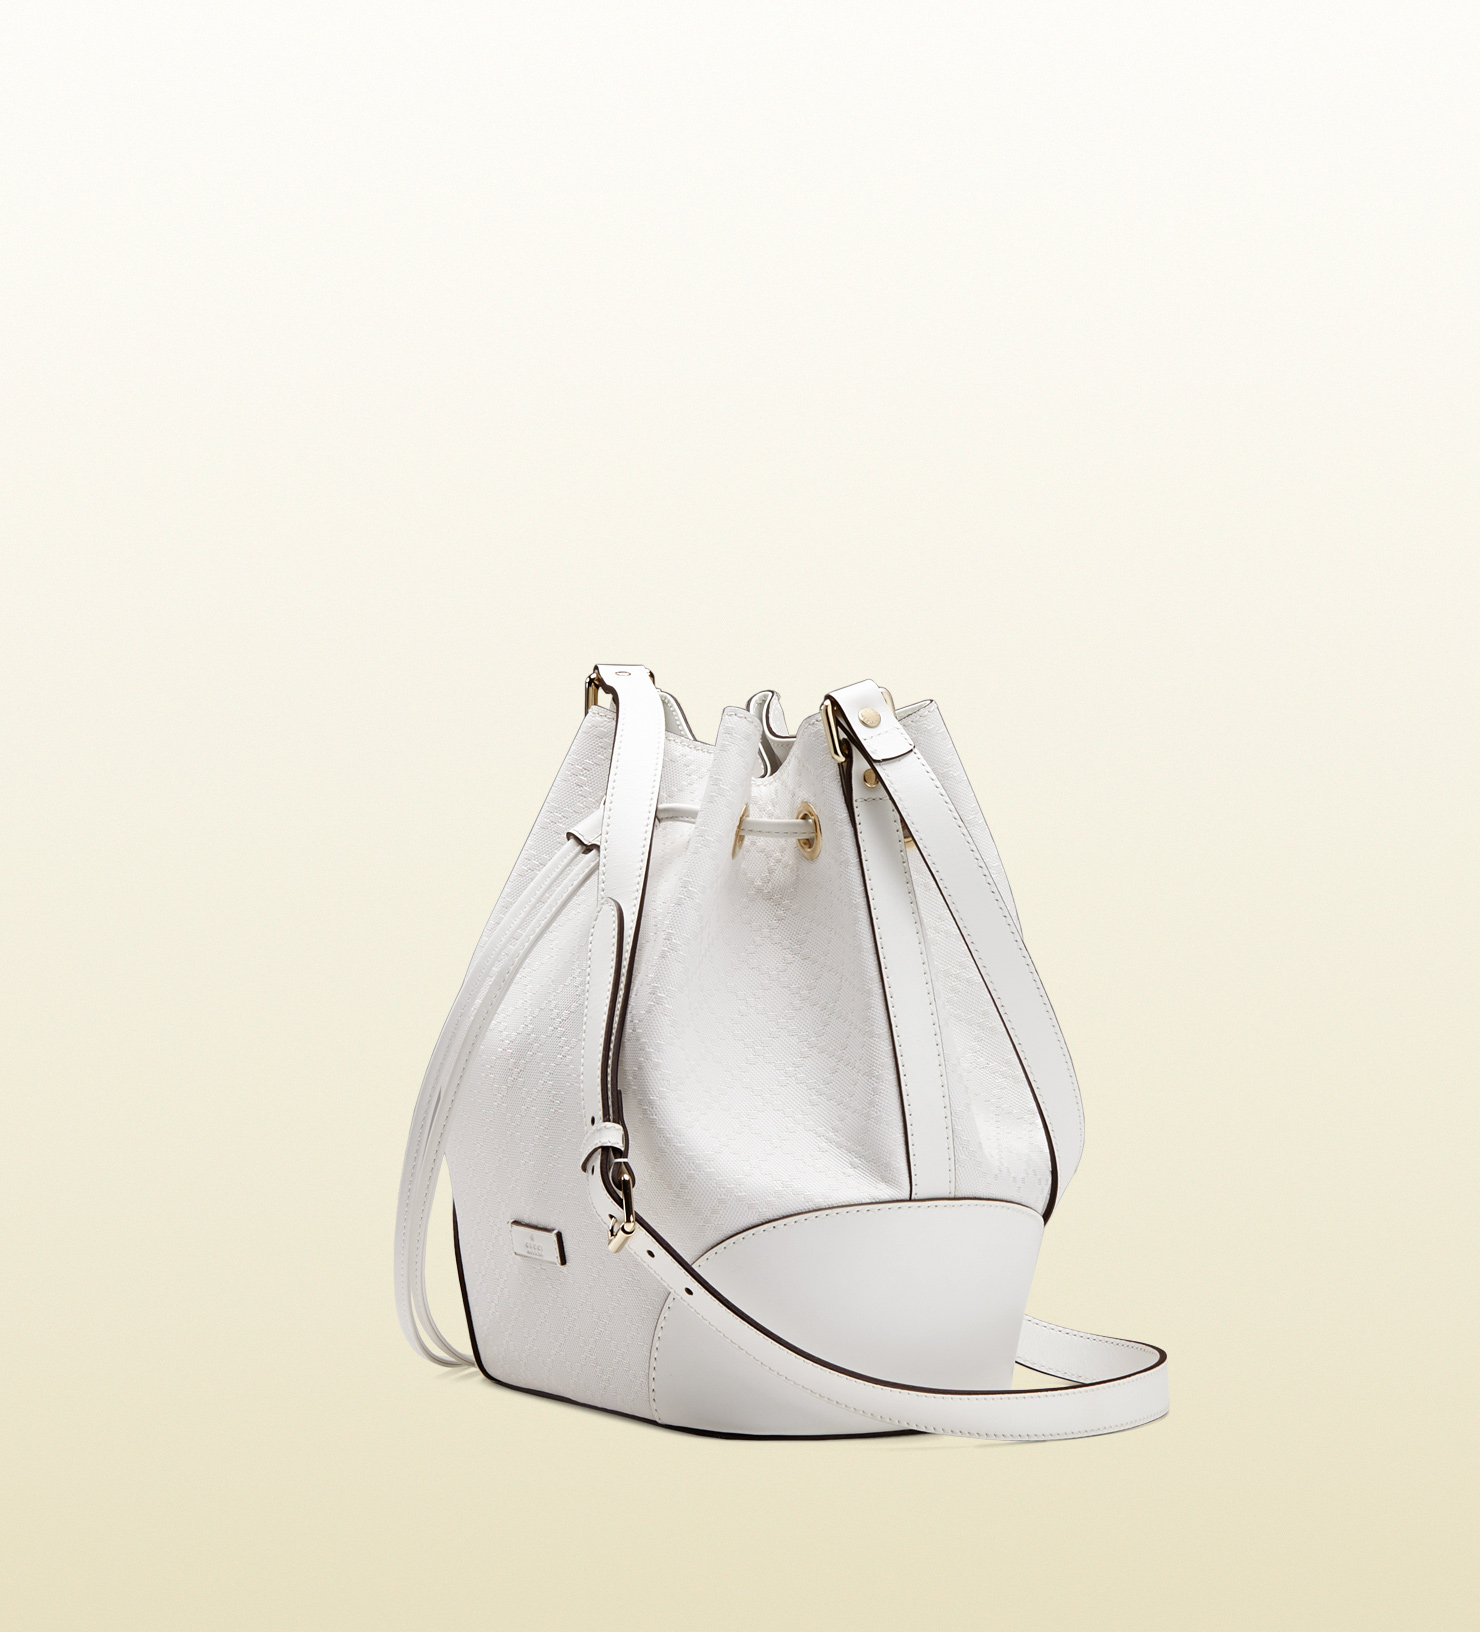 Lyst - Gucci Bright Diamante Leather Bucket Bag in White